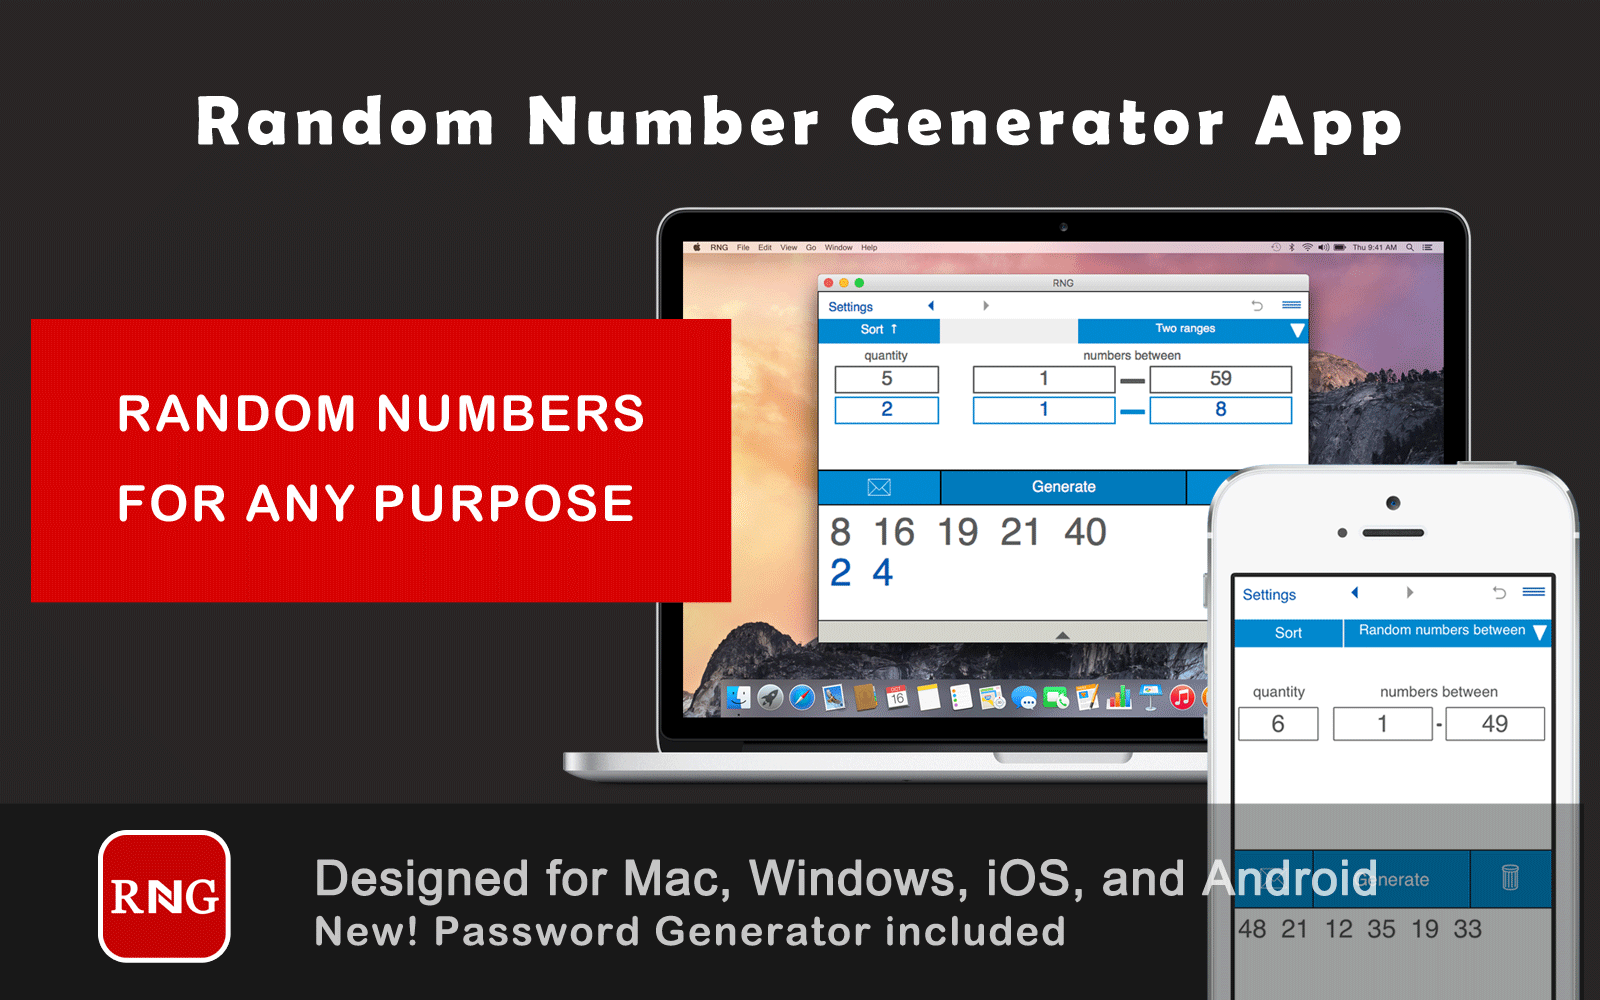 RNG - Random Number Generator app